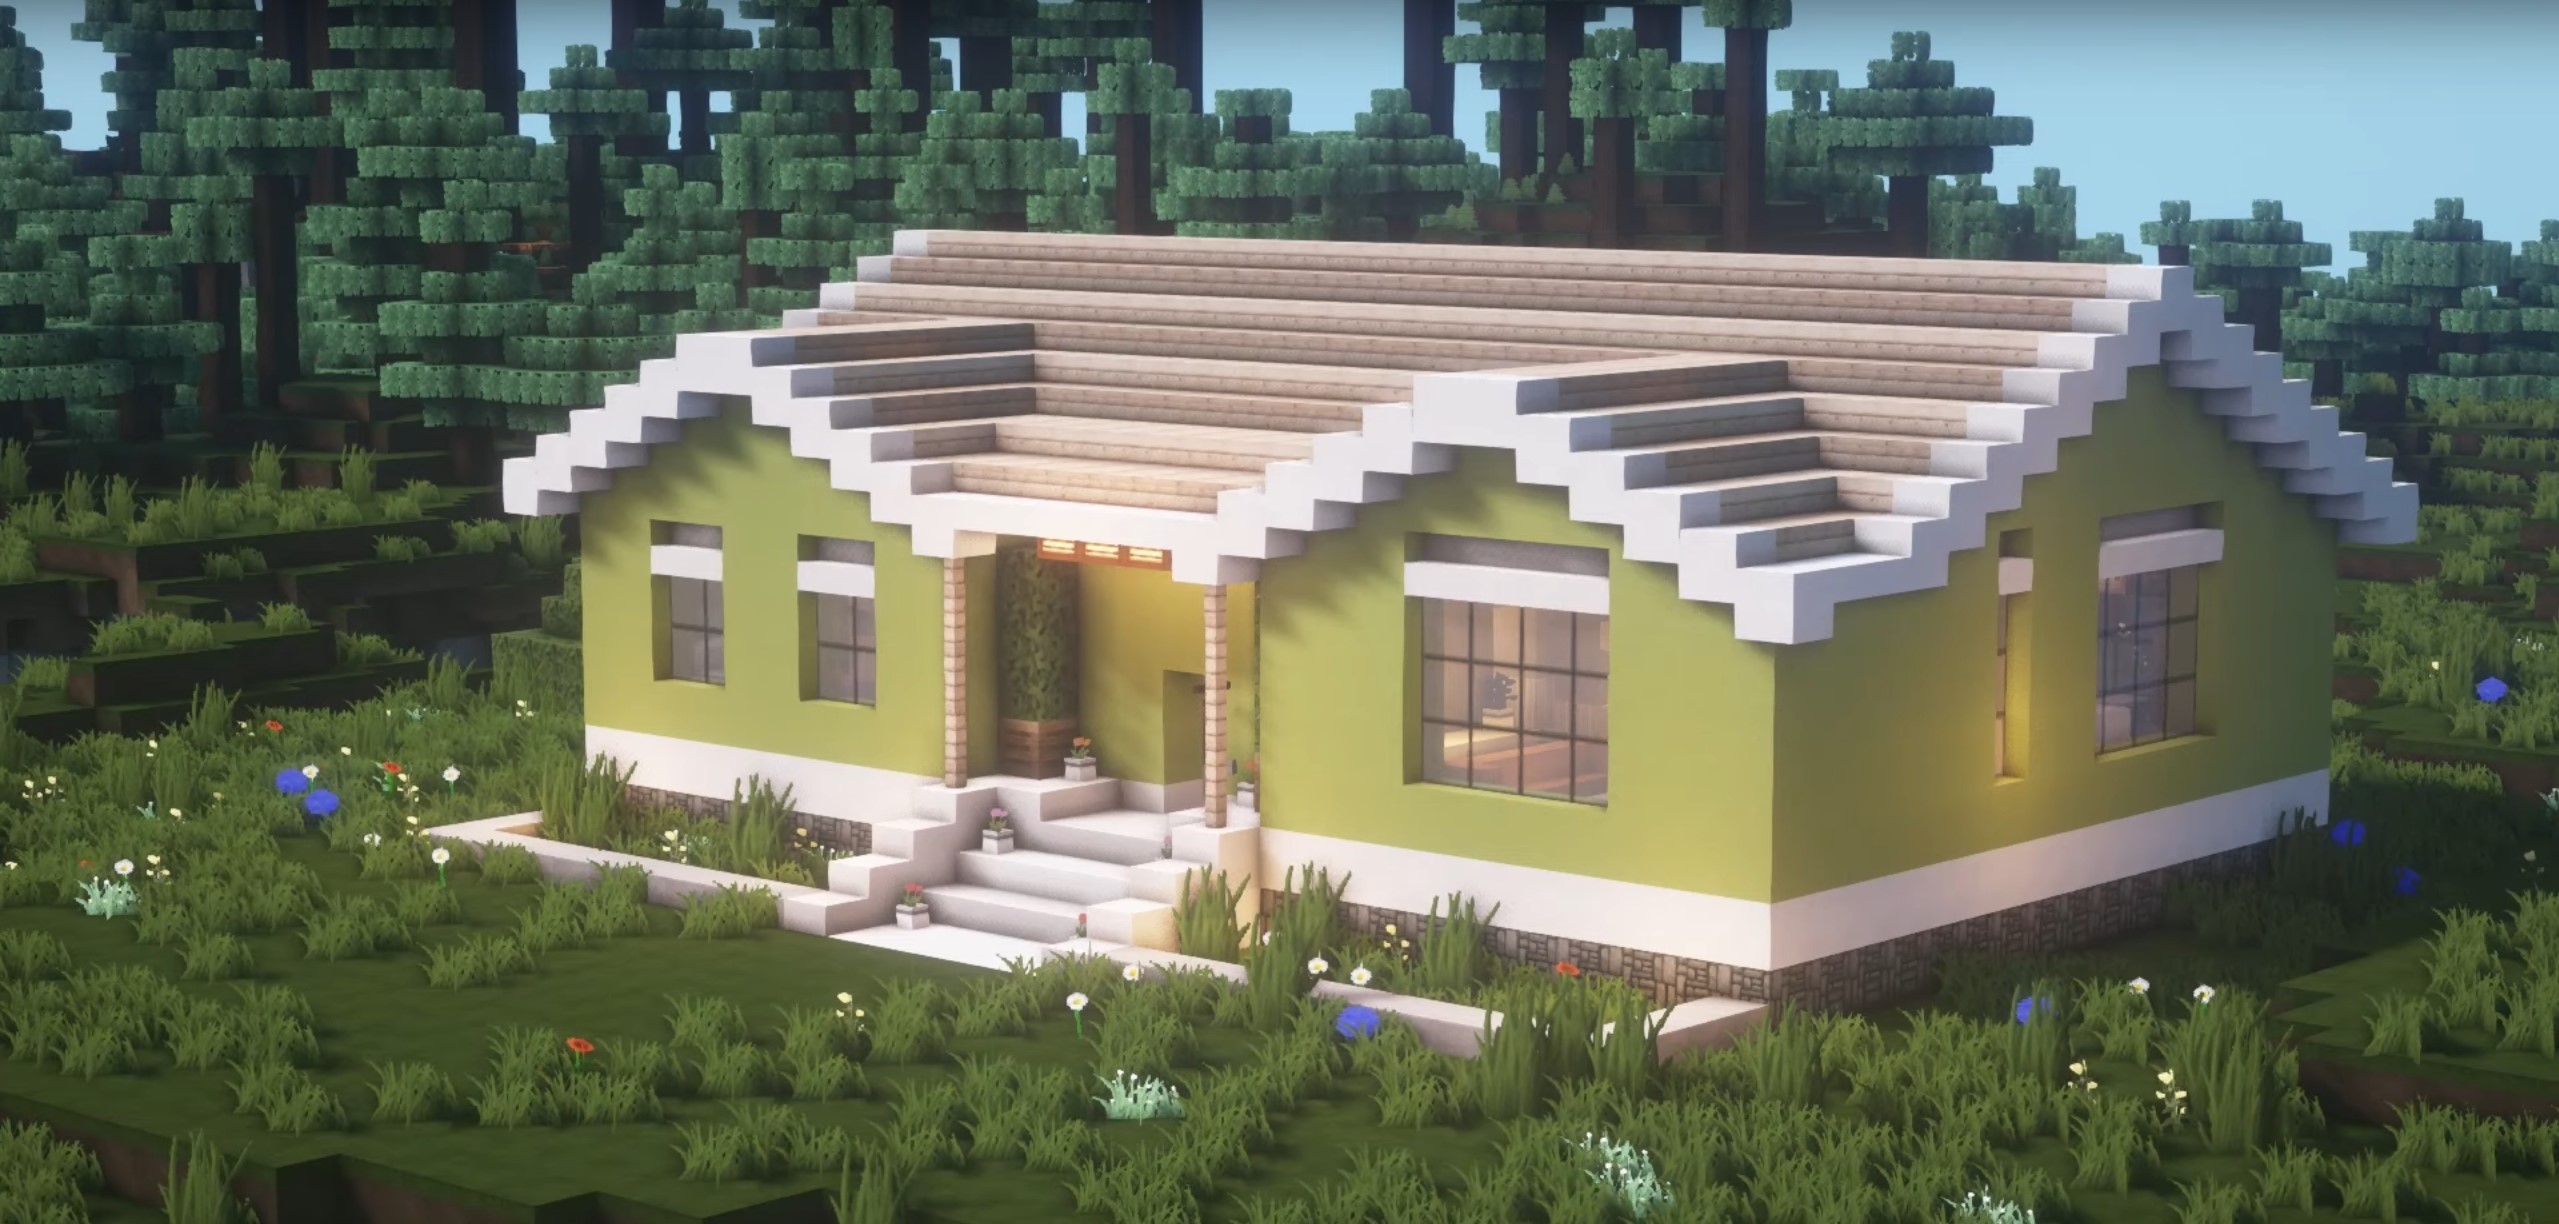 Minecraft Comfortable suburban house idea